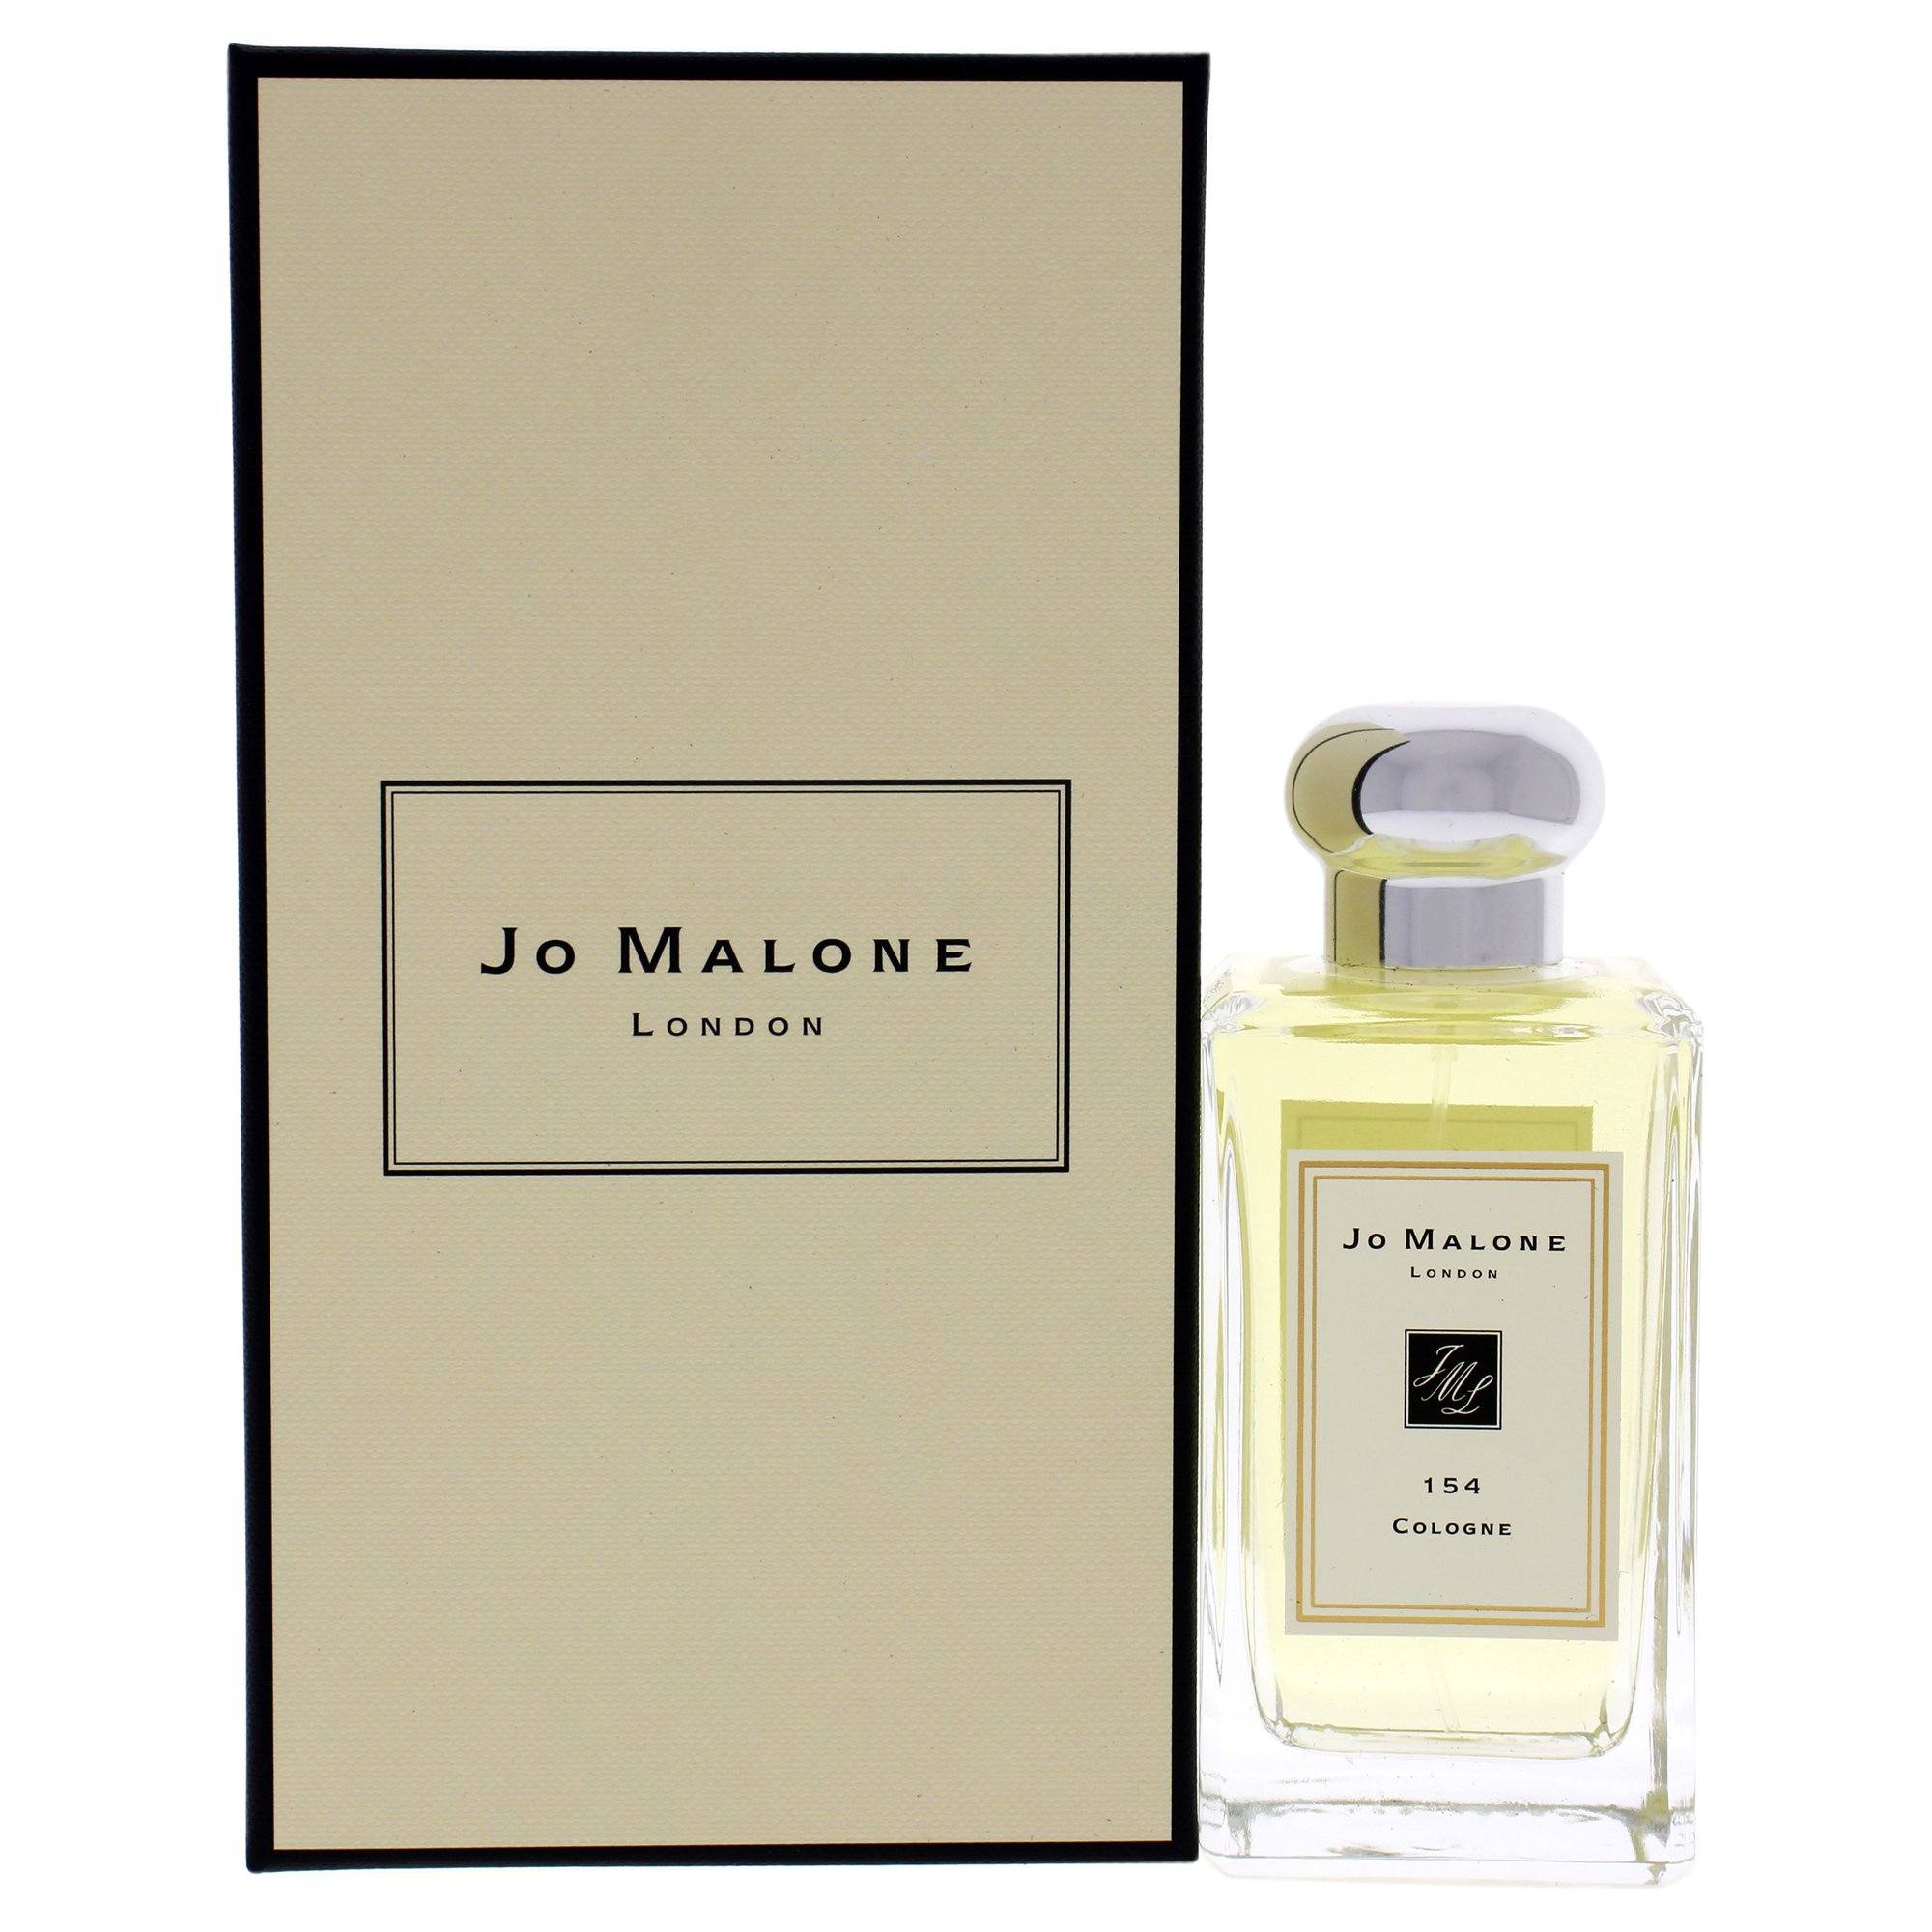 Jo Malone 154 Cologne | My Perfume Shop Australia